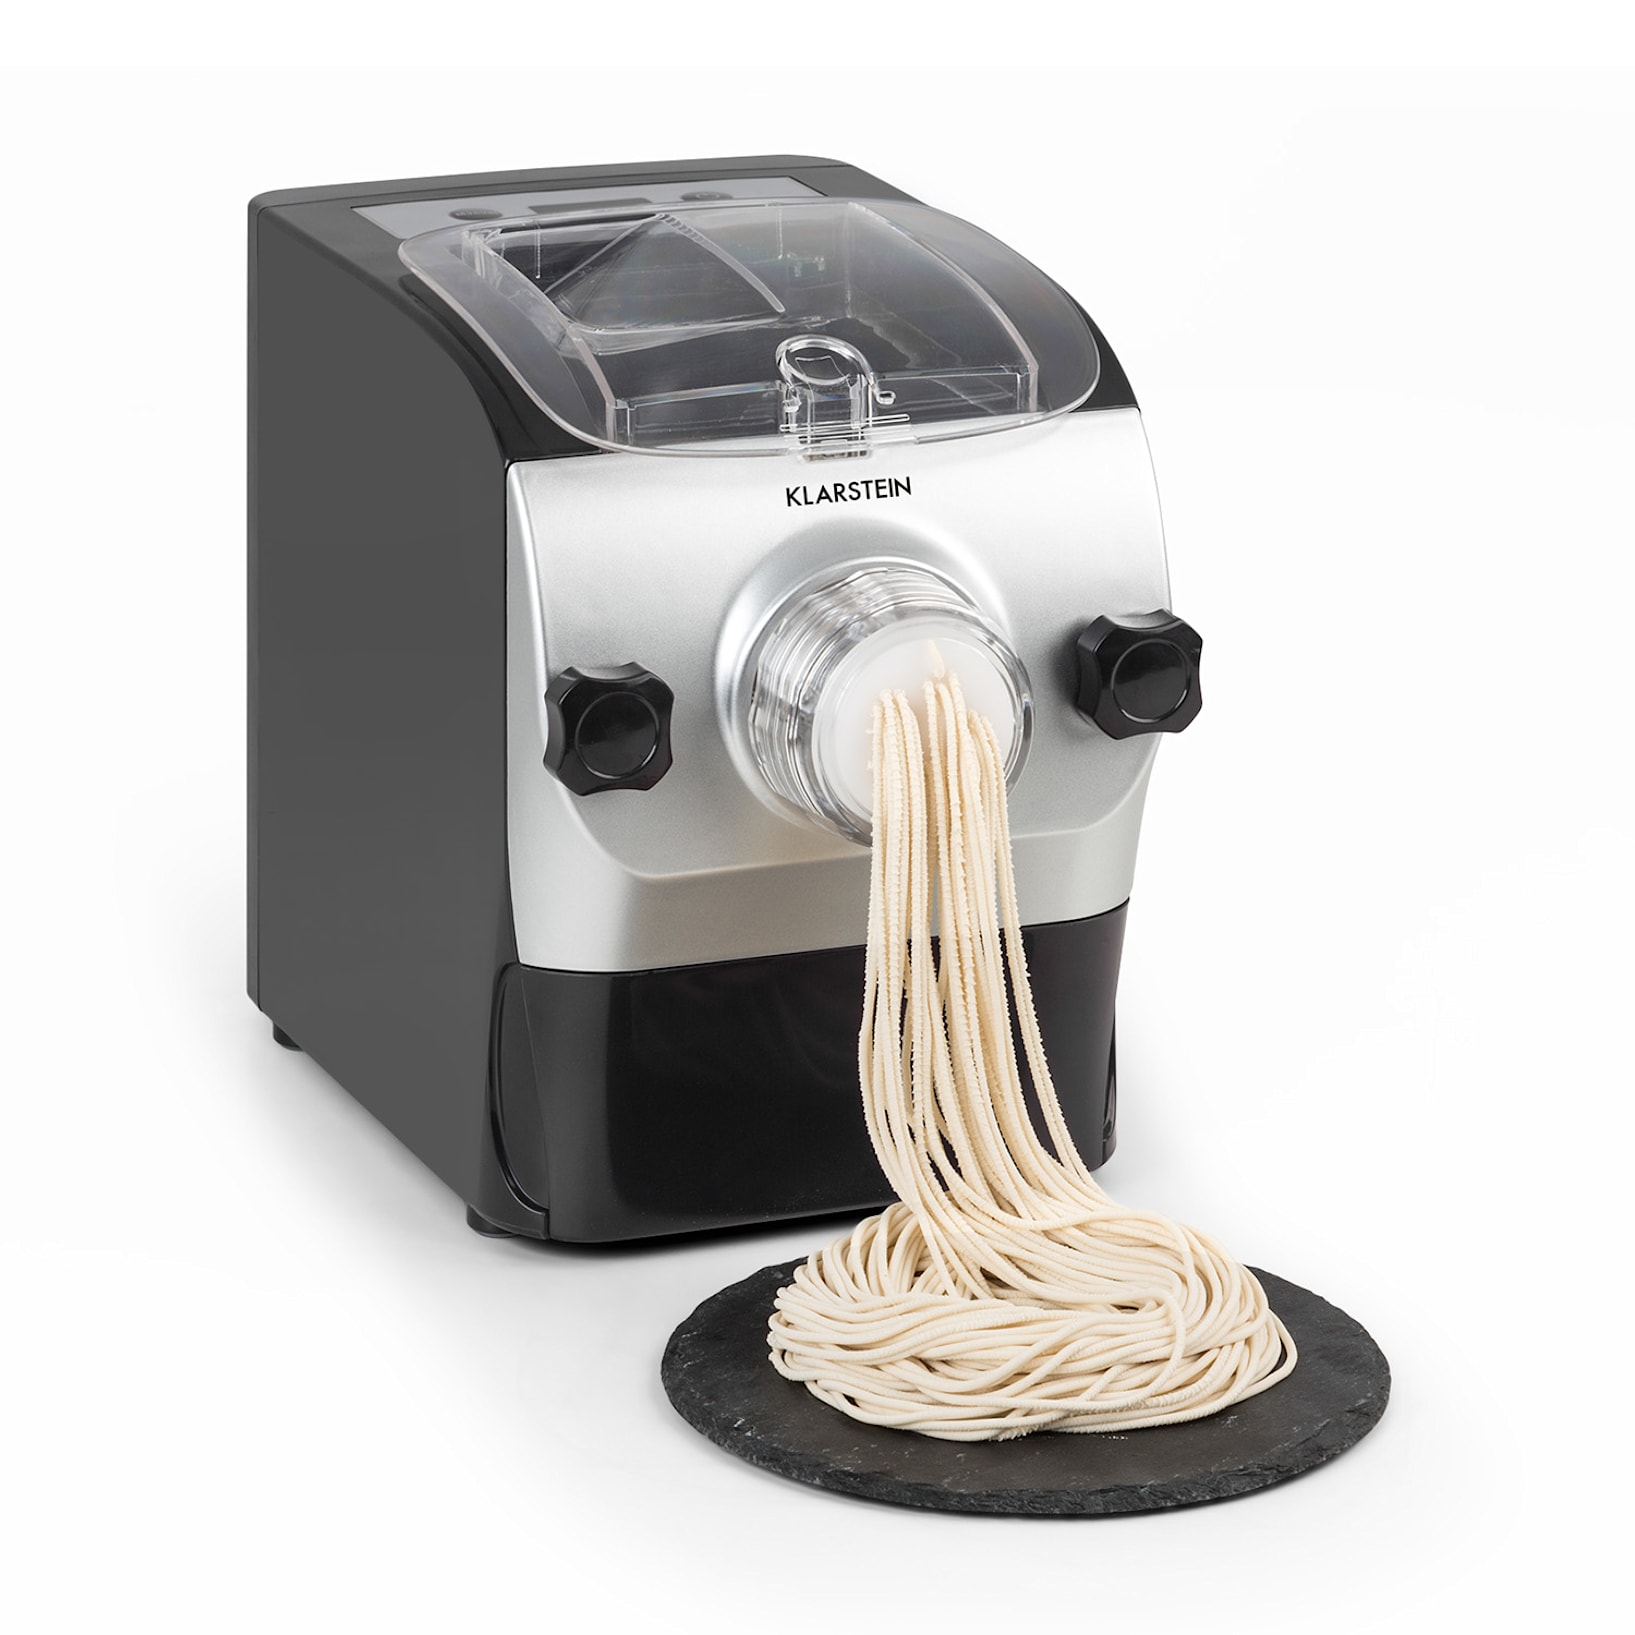 Pasta incartata | Spaghetti Kg. 1 - Offerta 4 Pezzi